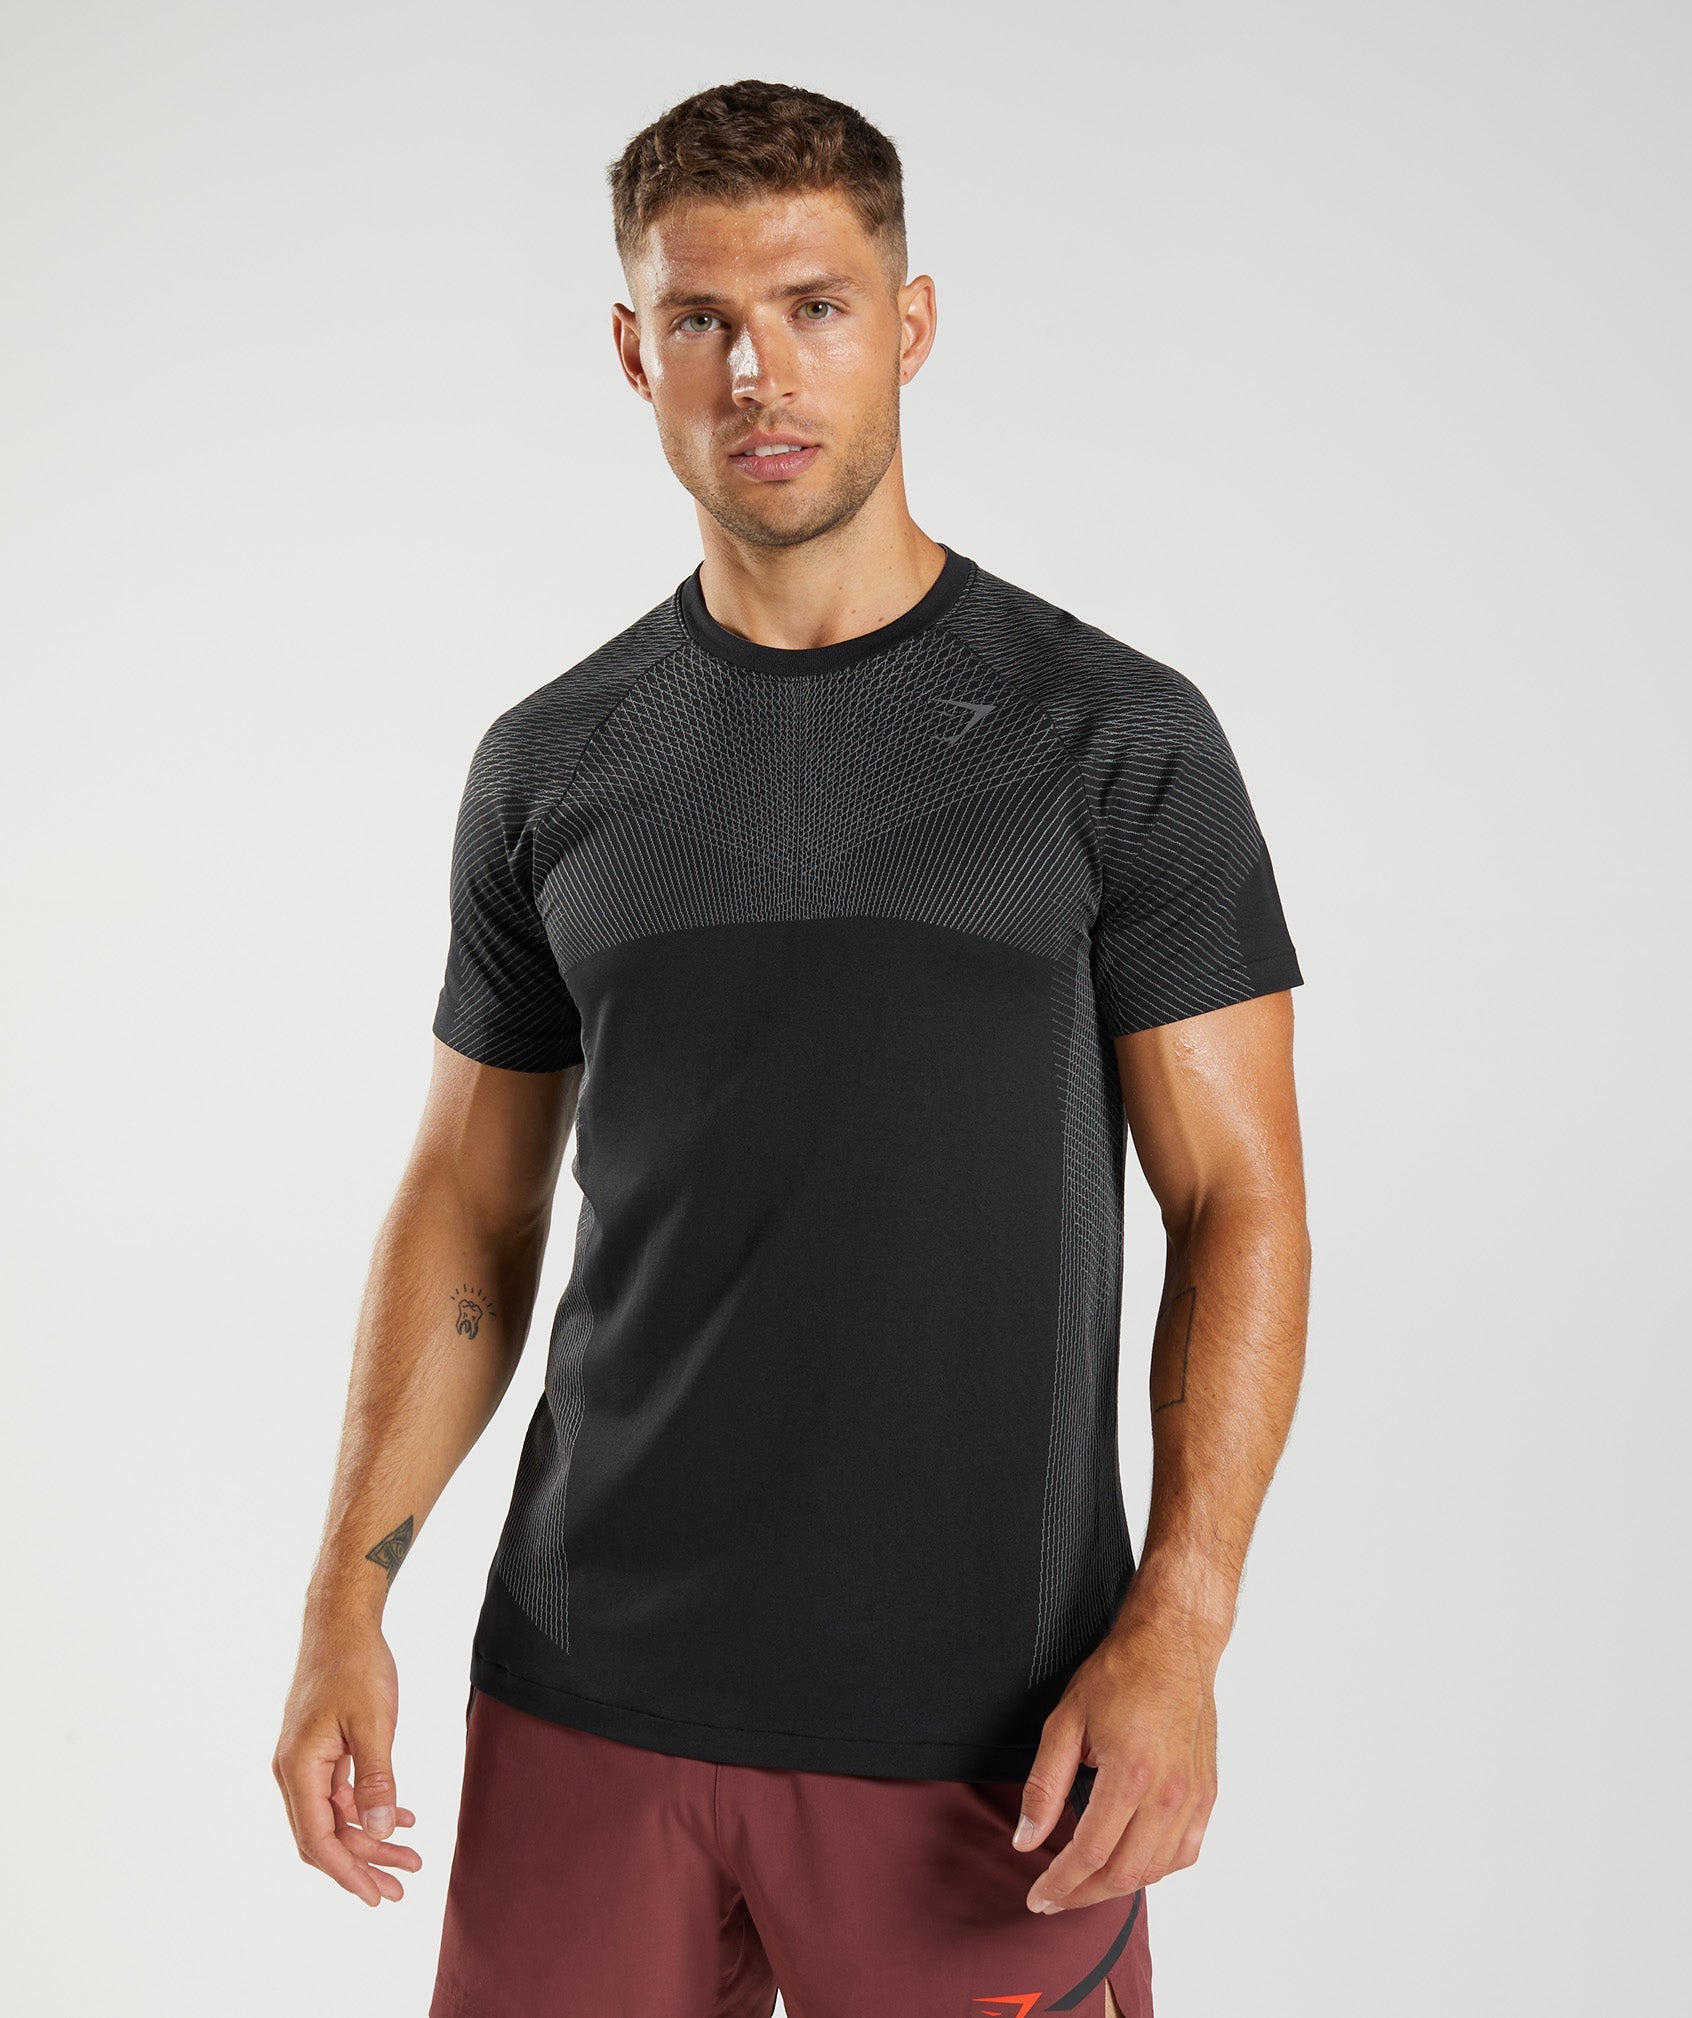 Gymshark Apex Seamless T-Shirt - Black/Silhouette Grey | Gymshark